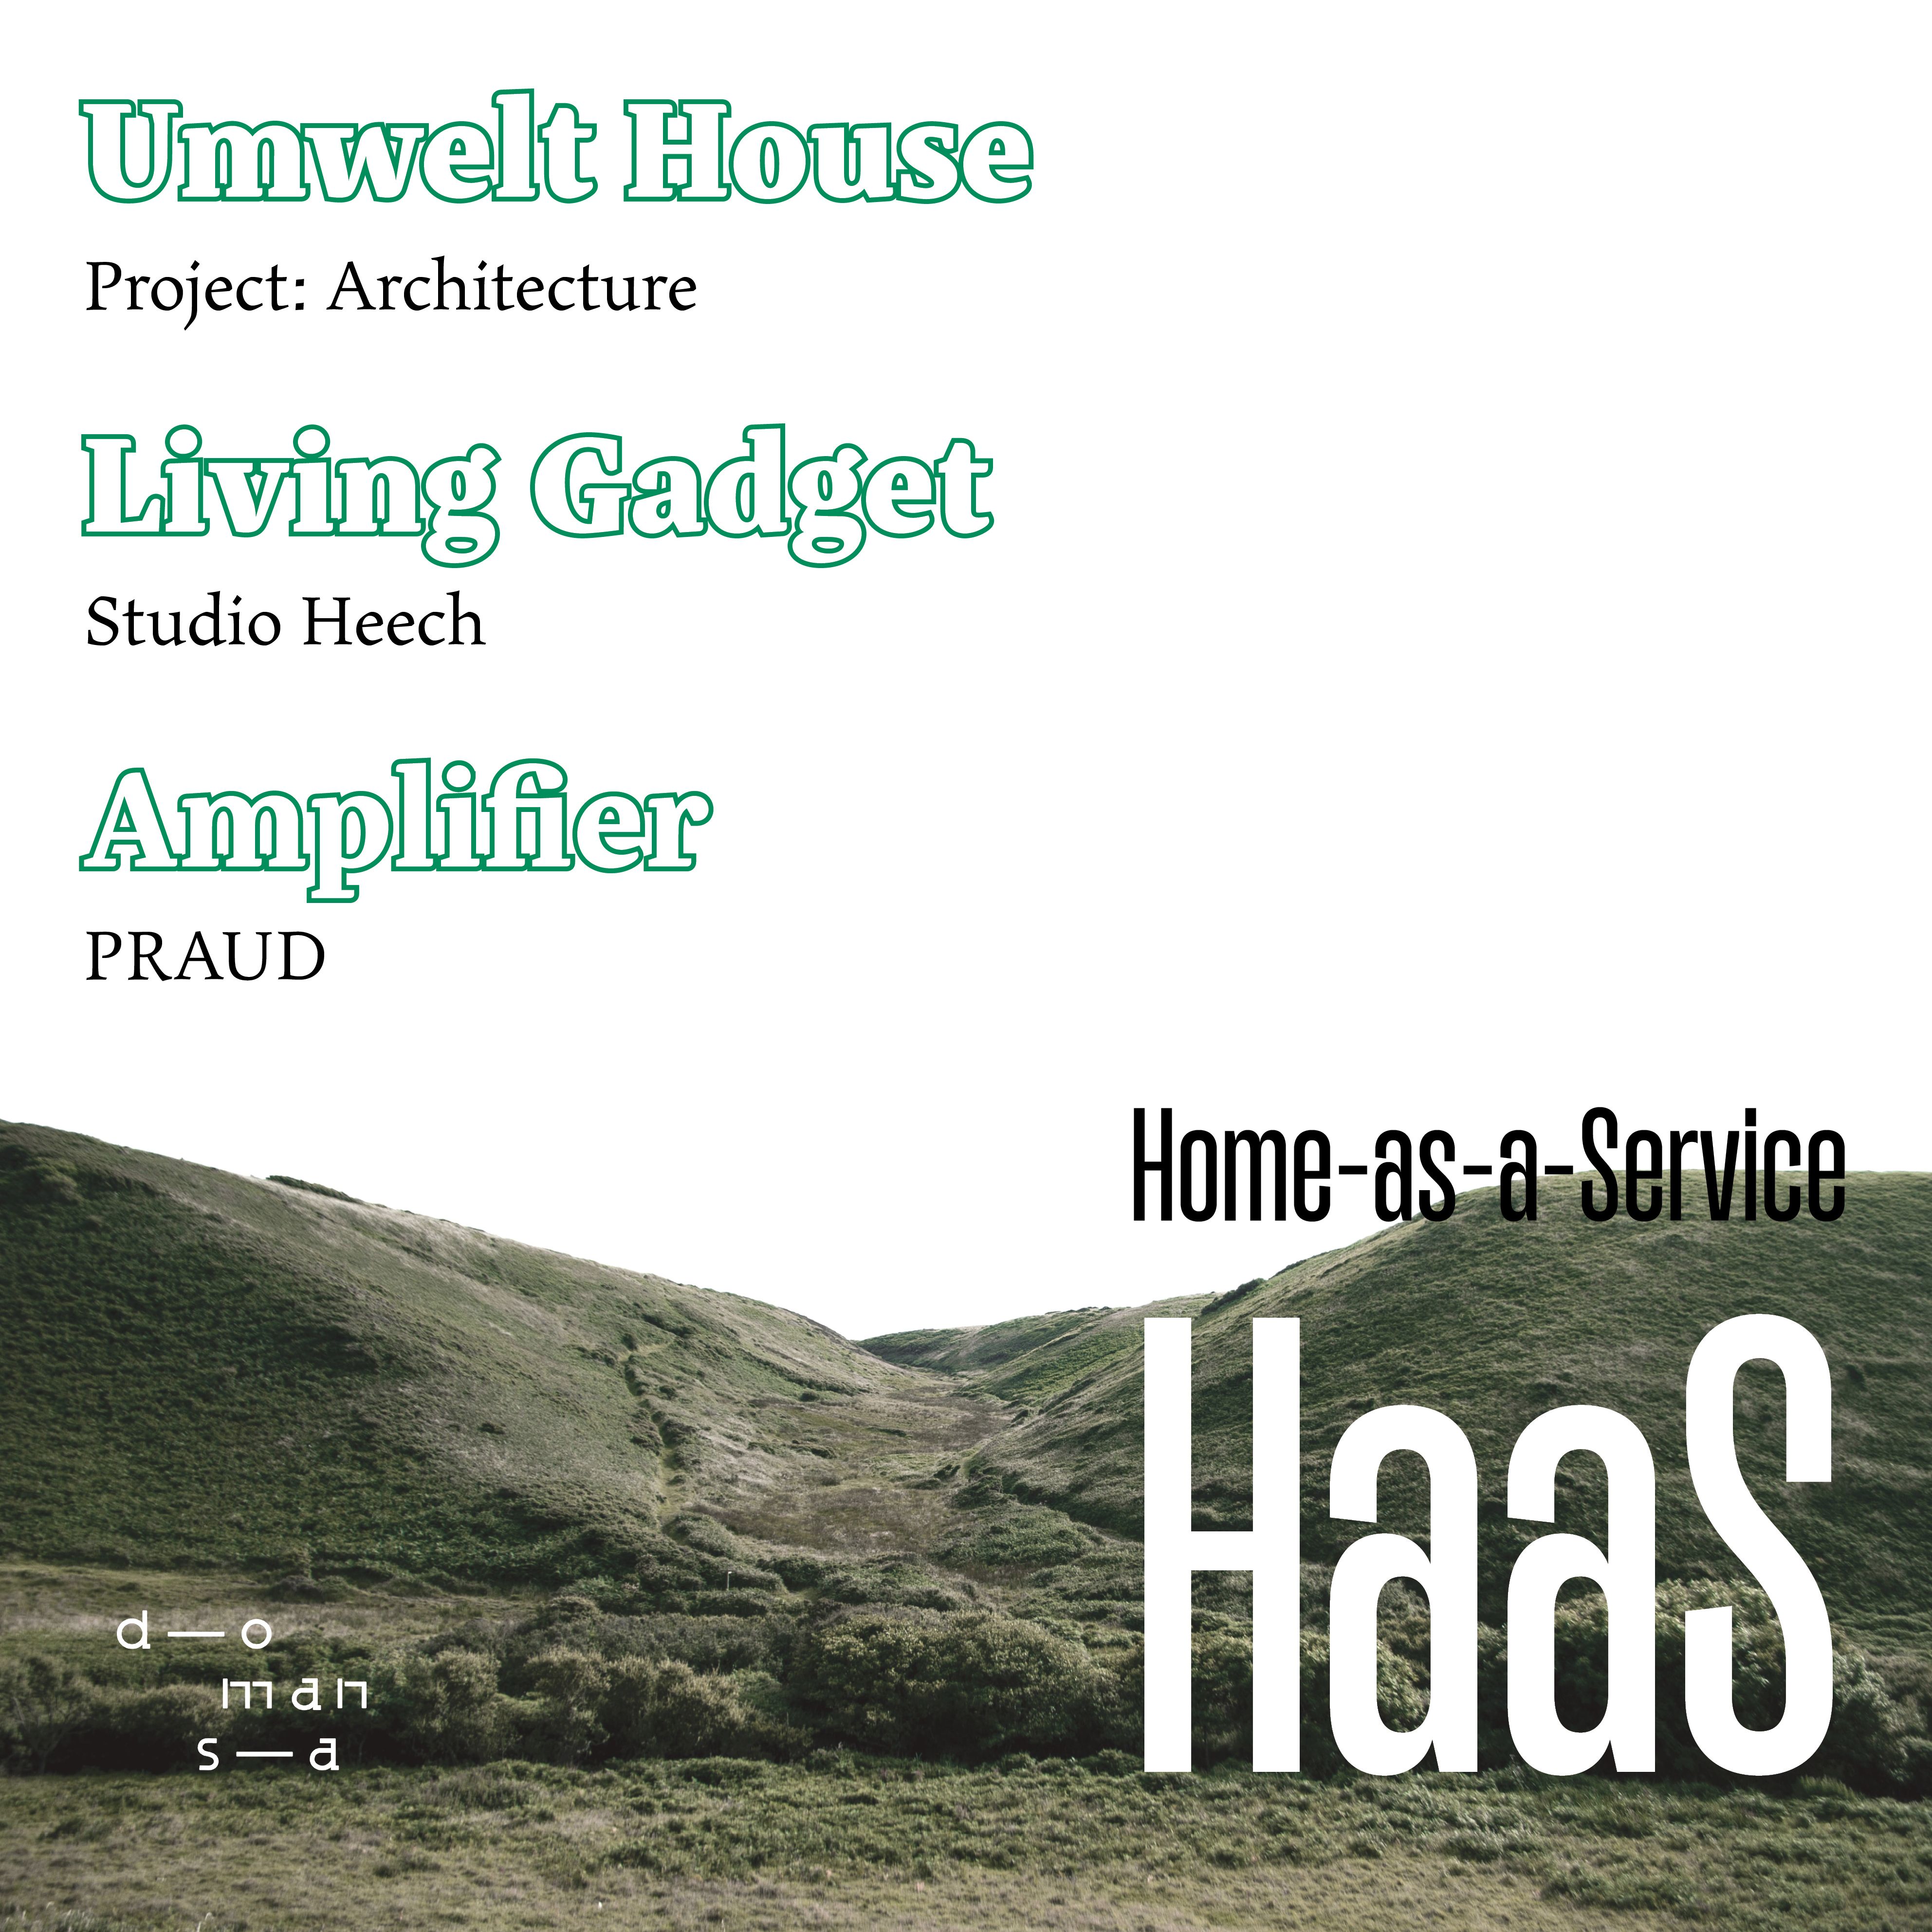 HaaS : Home-as-a-Service